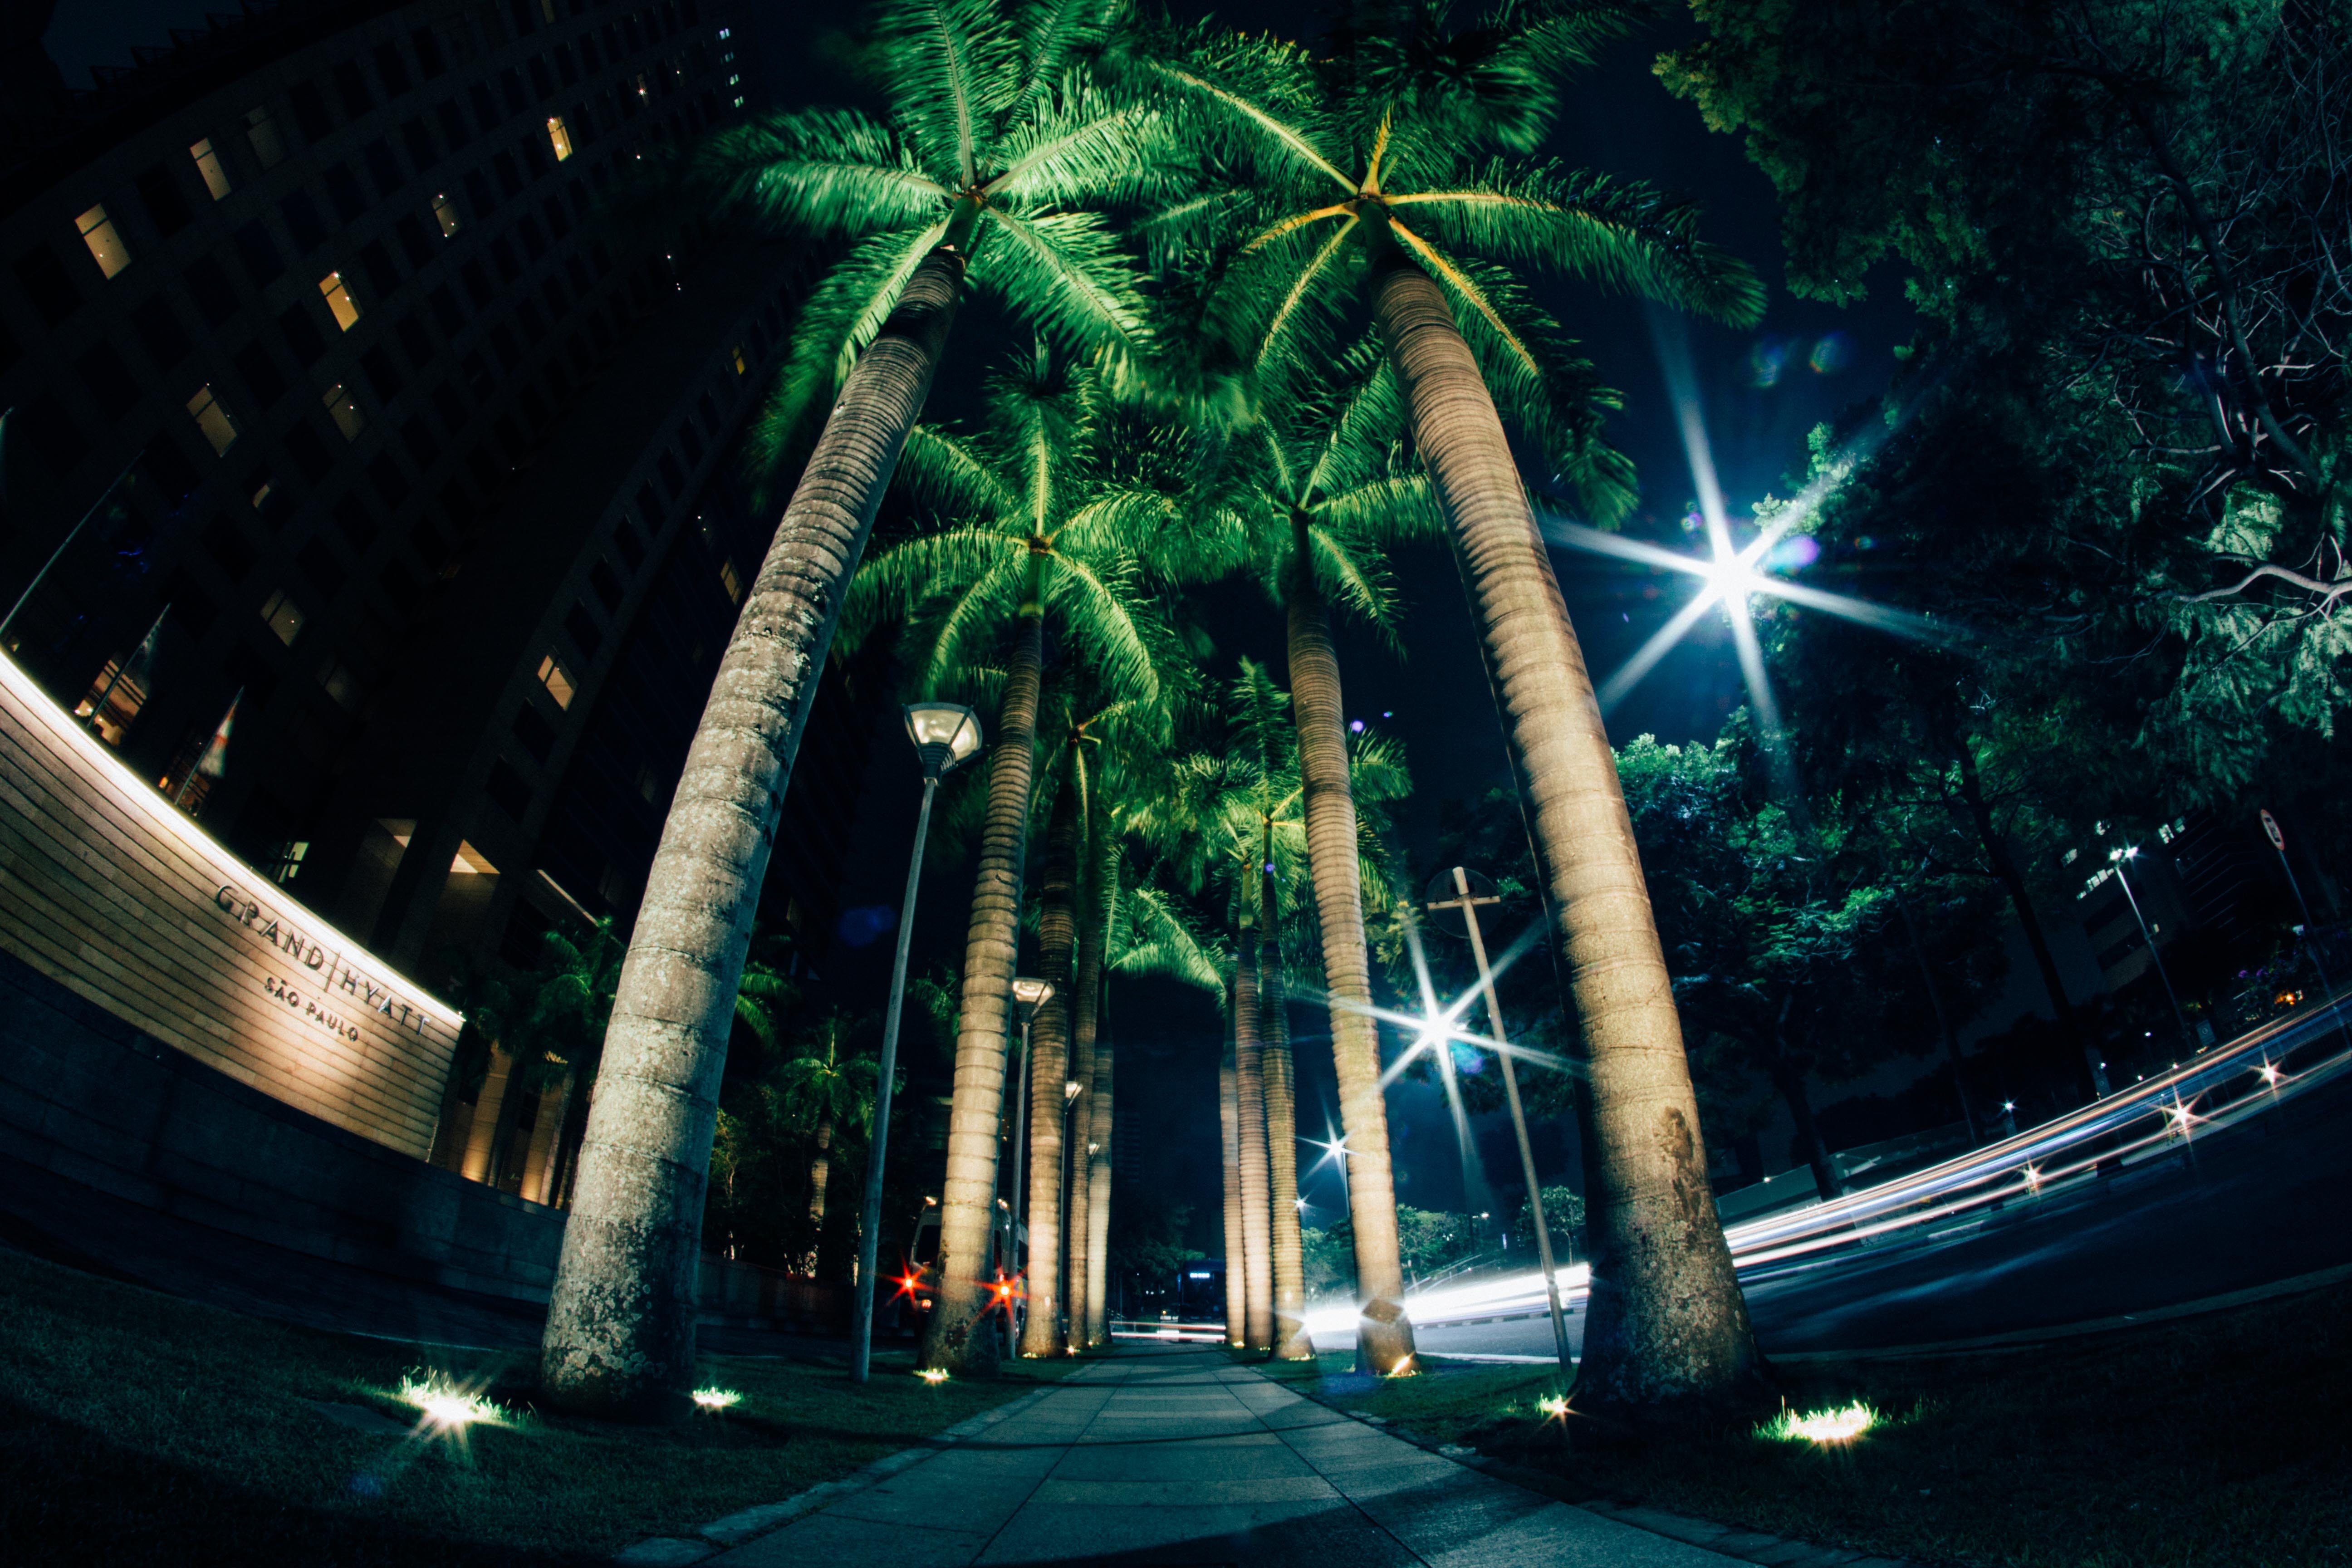 cities, night, palms, illumination, street, lighting